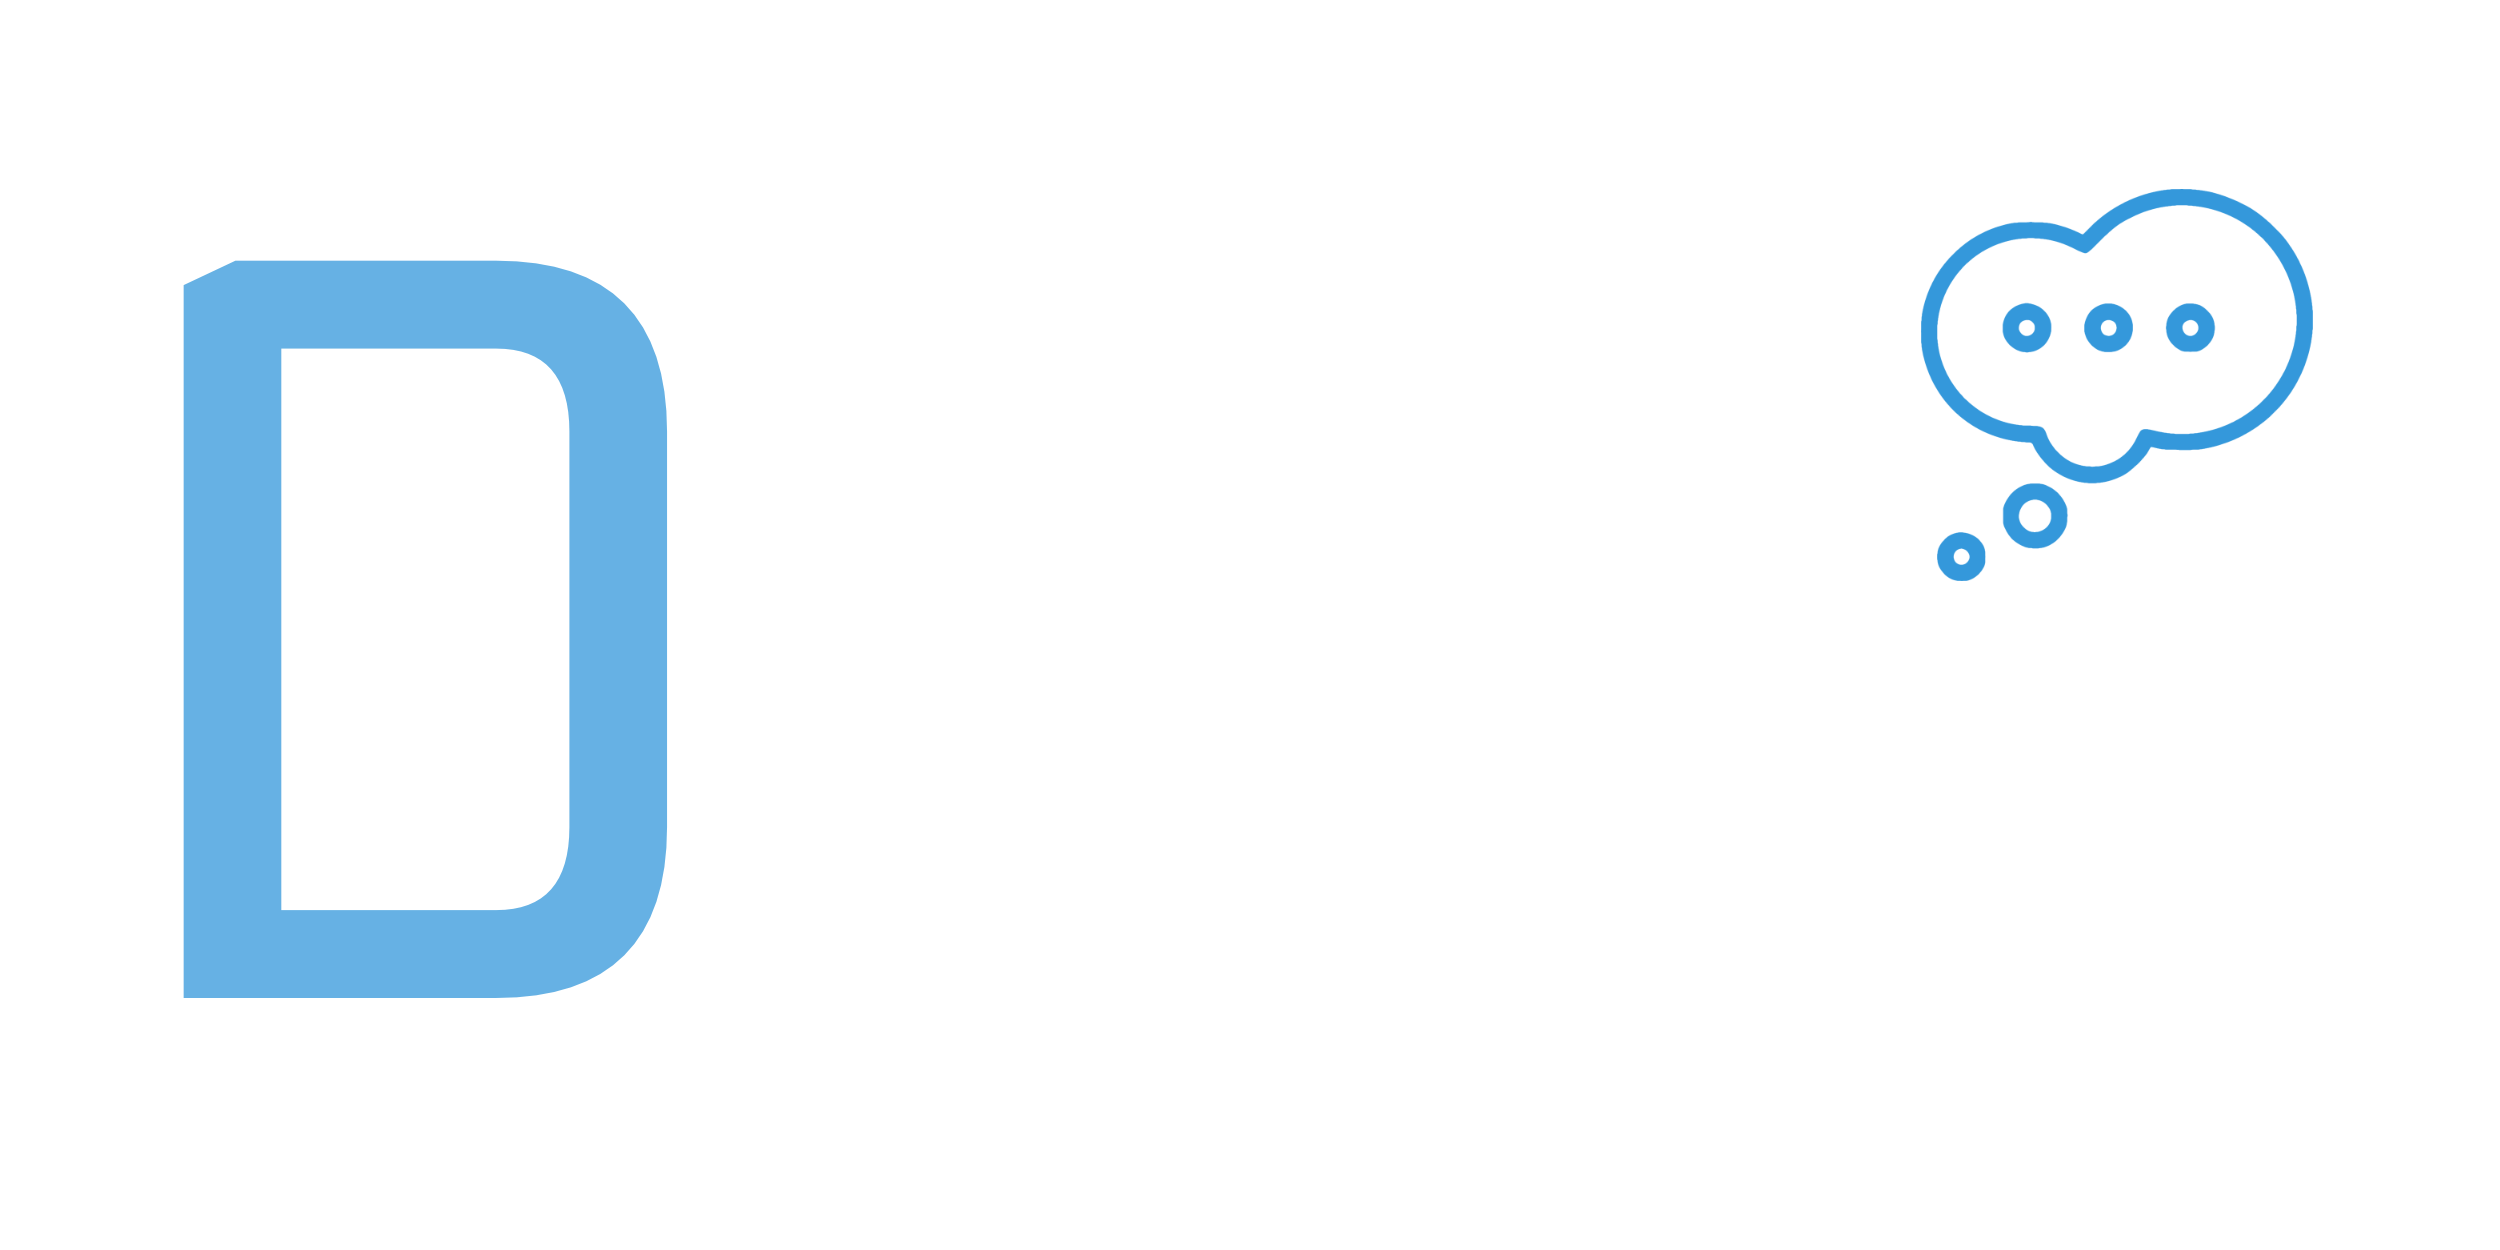 Dream Designs